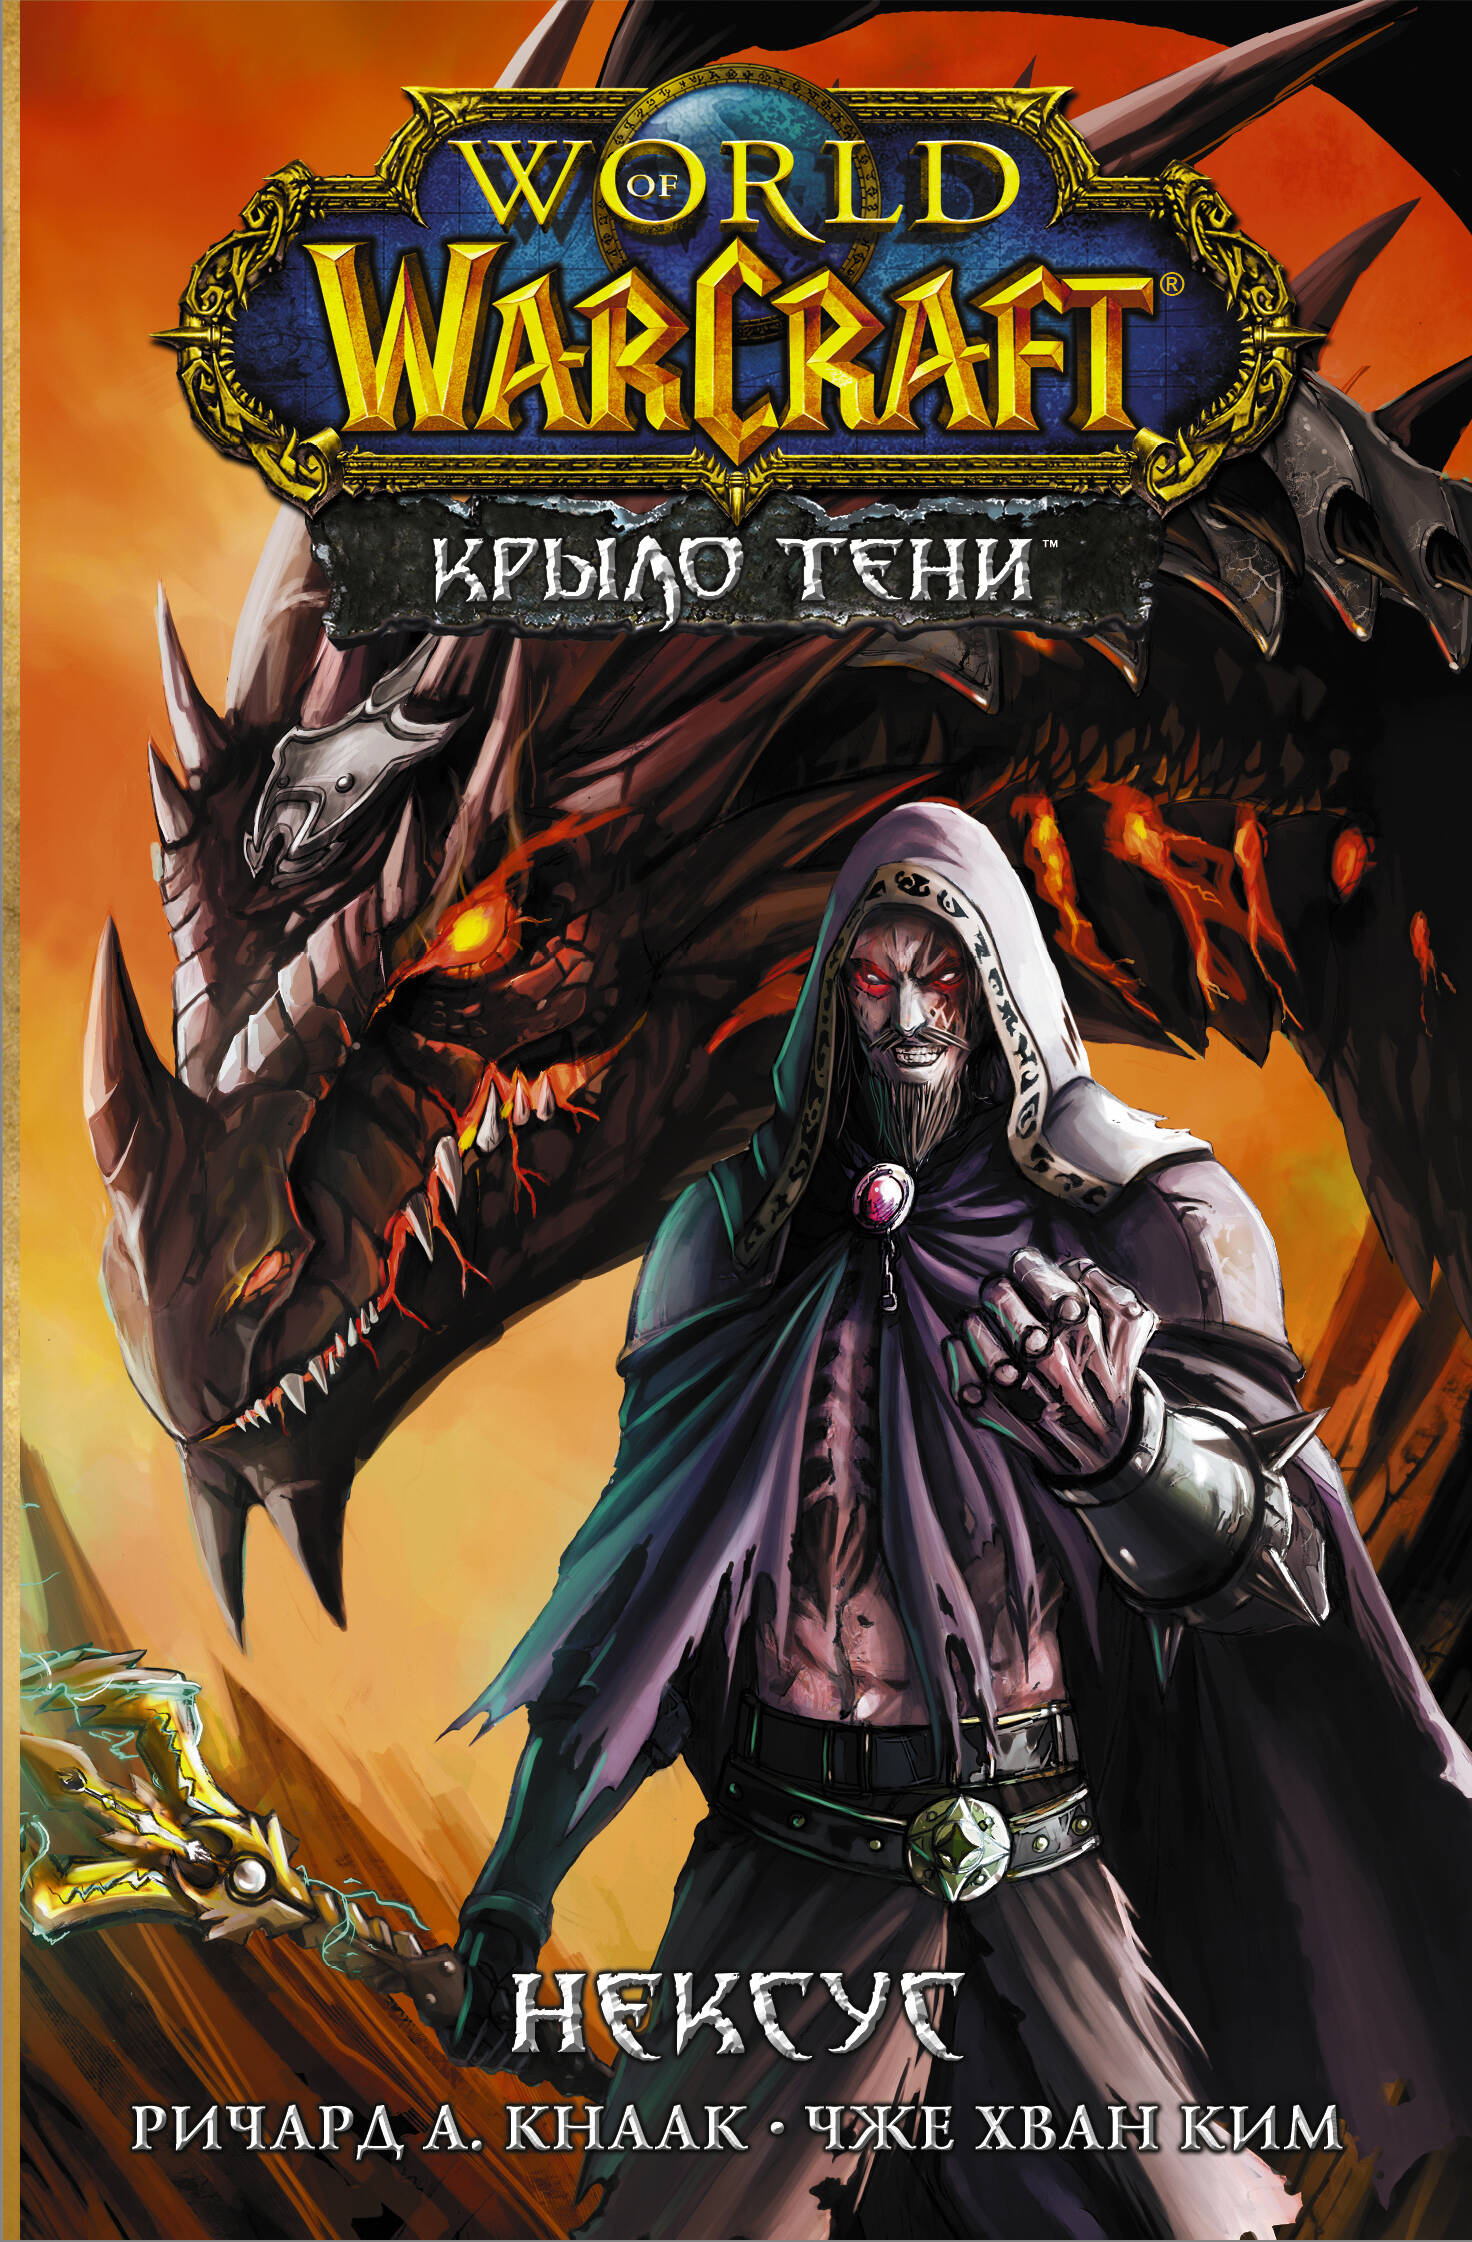 кнаак ричард world of warcraft крыло тени драконы запределья Кнаак Ричард World of Warcraft. Крыло тени. Нексус